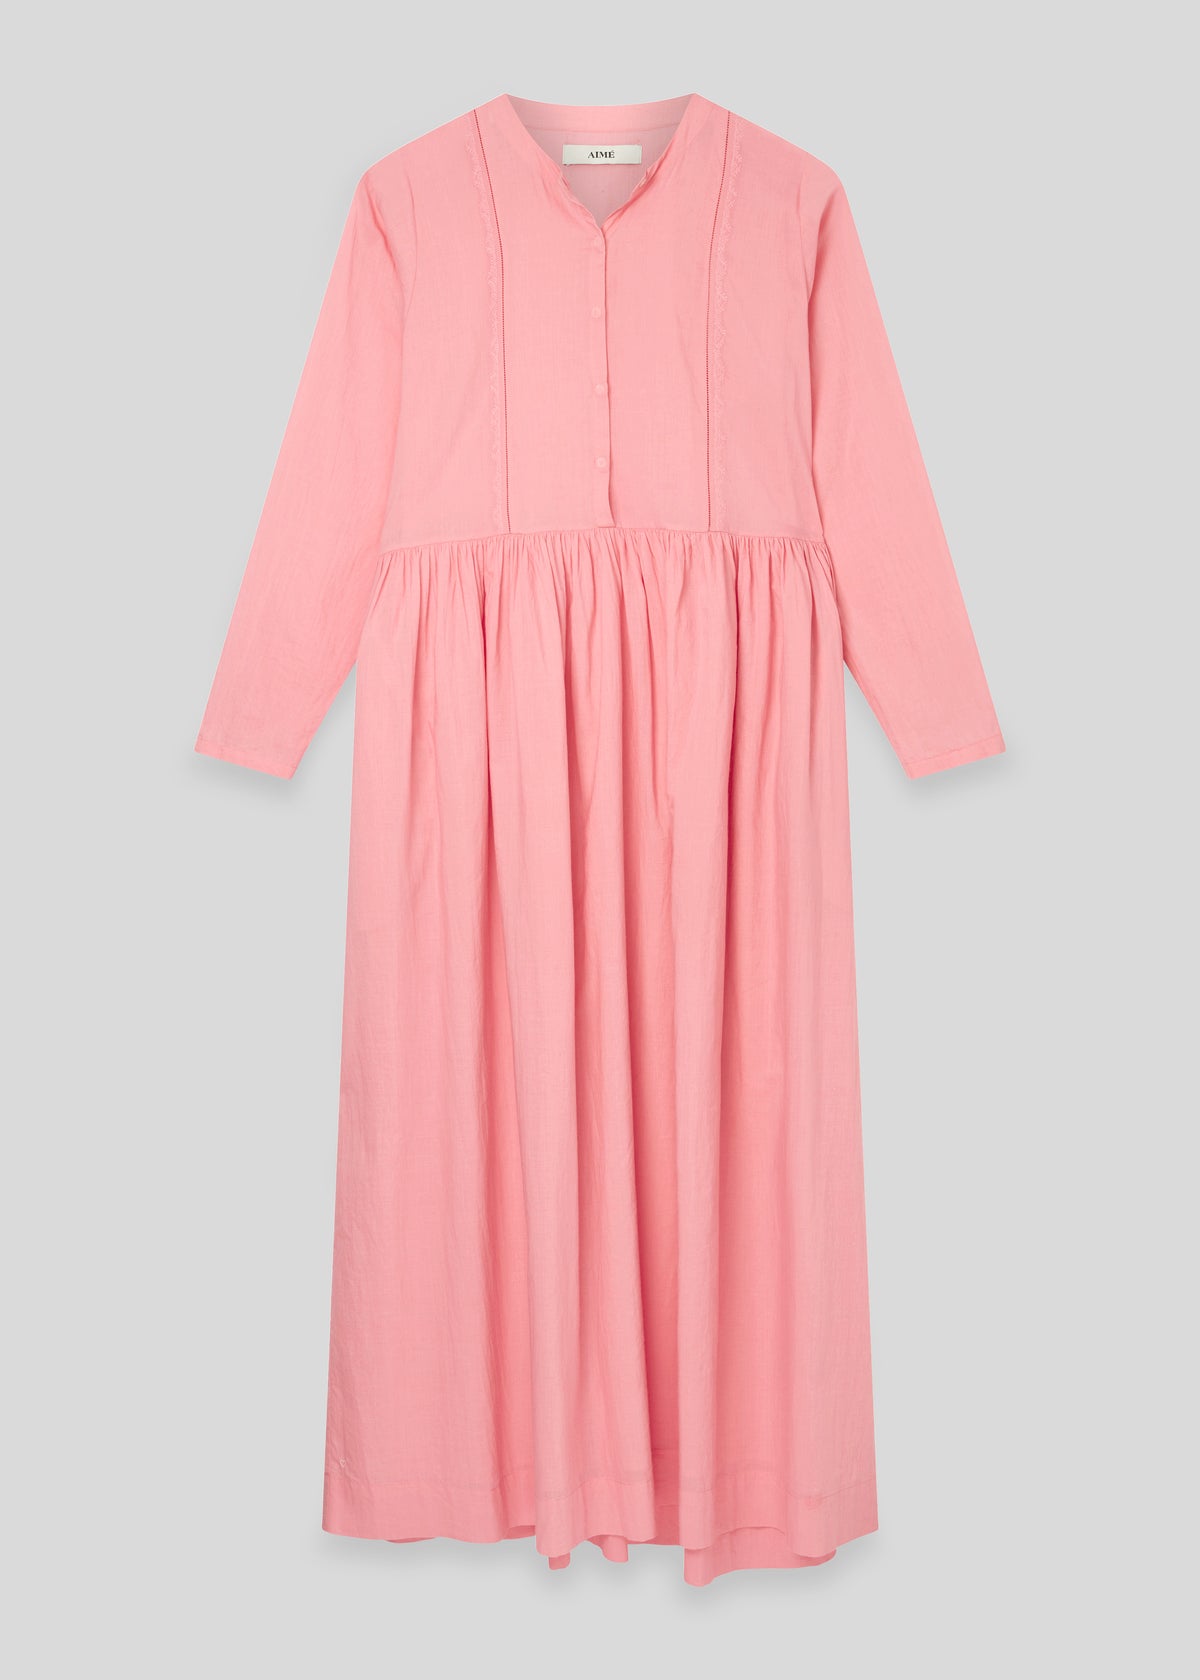 ARUM DRESS —  ROSE JAIPUR by Aimé